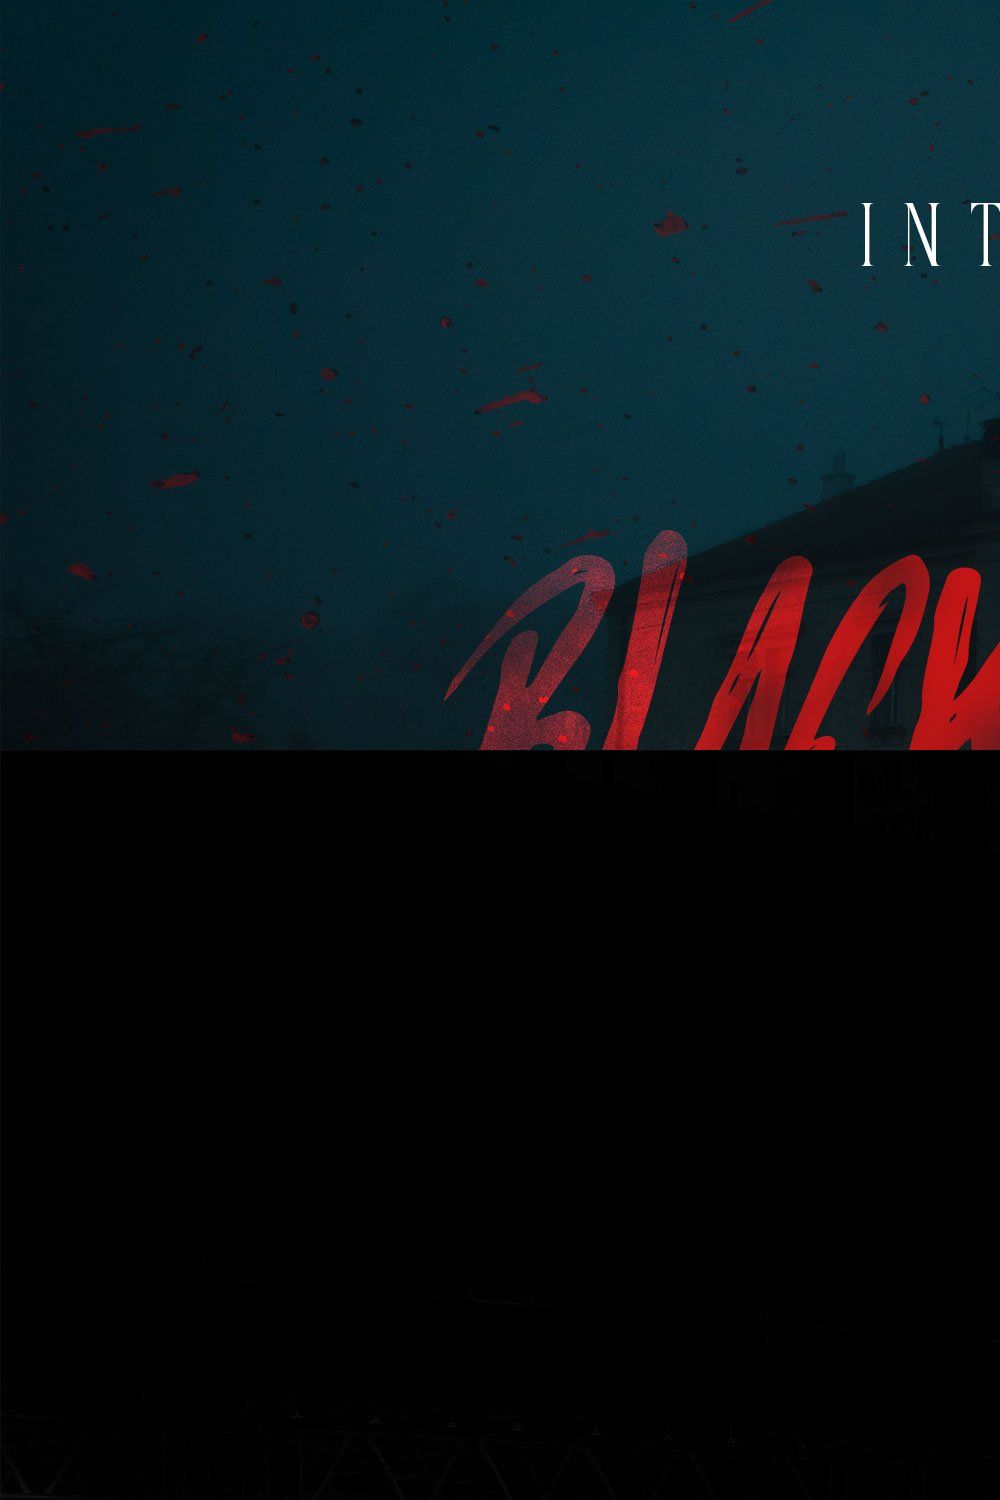 Black House - Horror Font Display pinterest preview image.